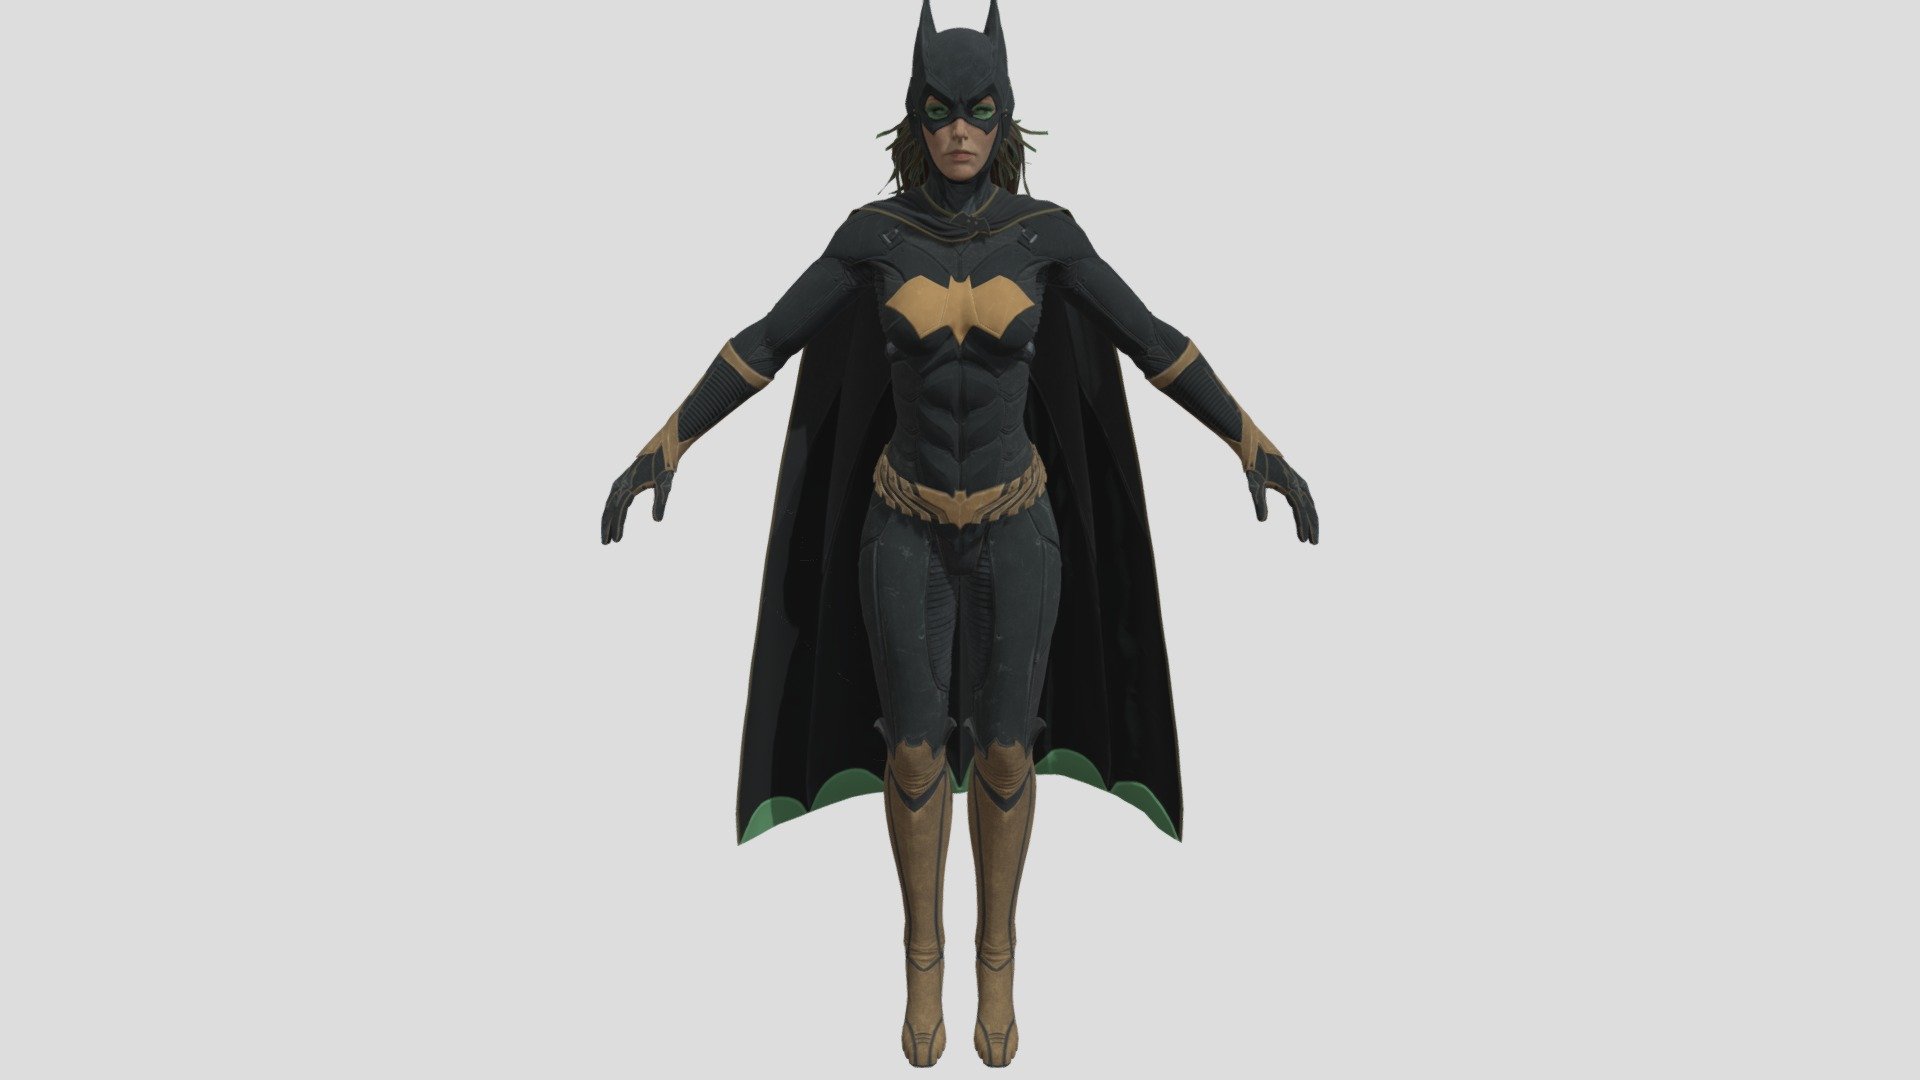 arkham knights batgirl download